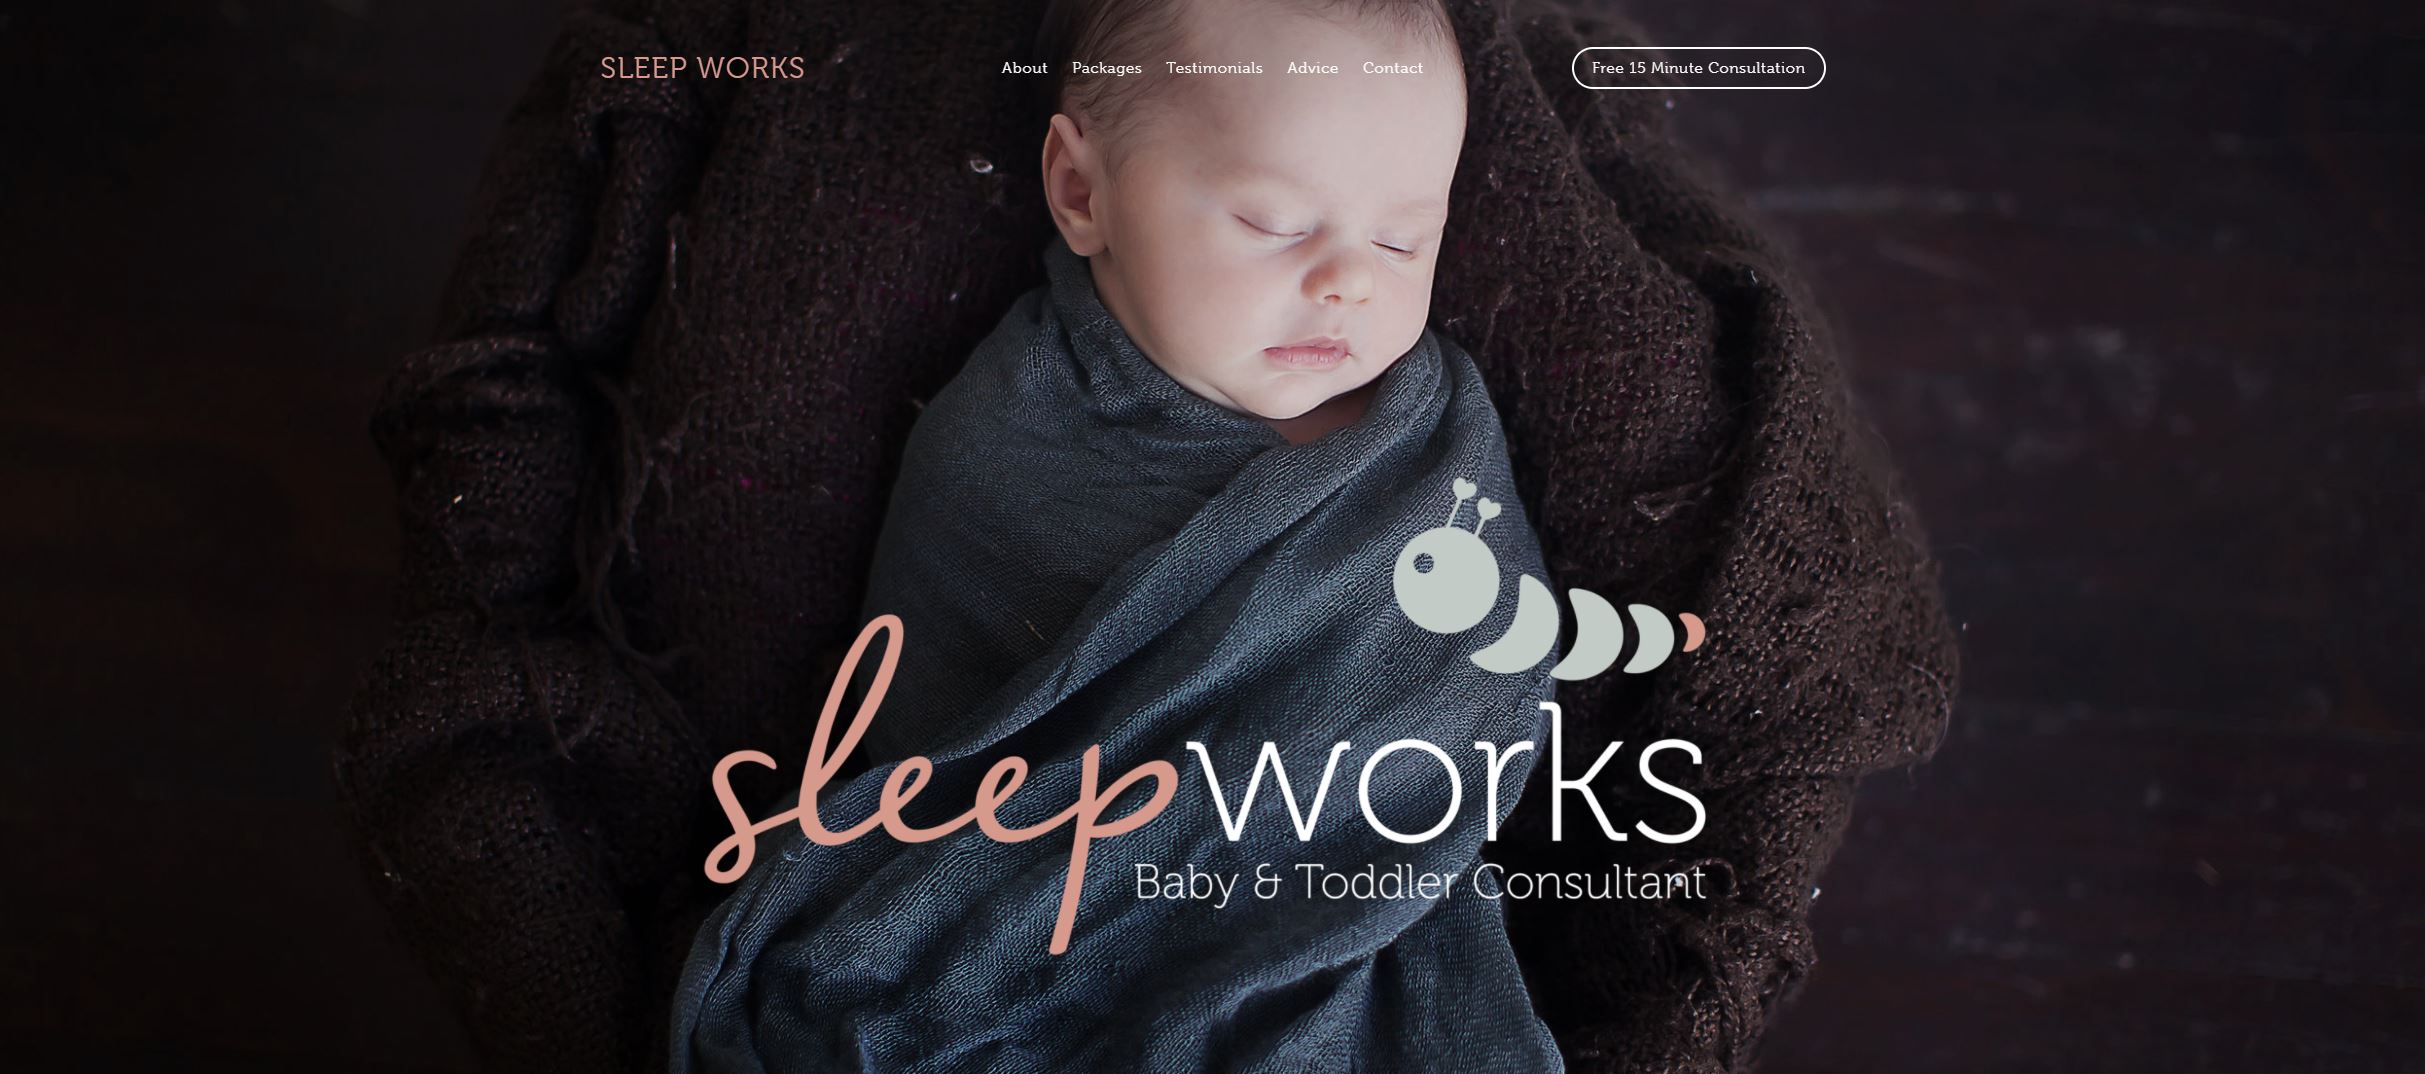 sleep-works-baby-sleep-consultant-home-page.JPG